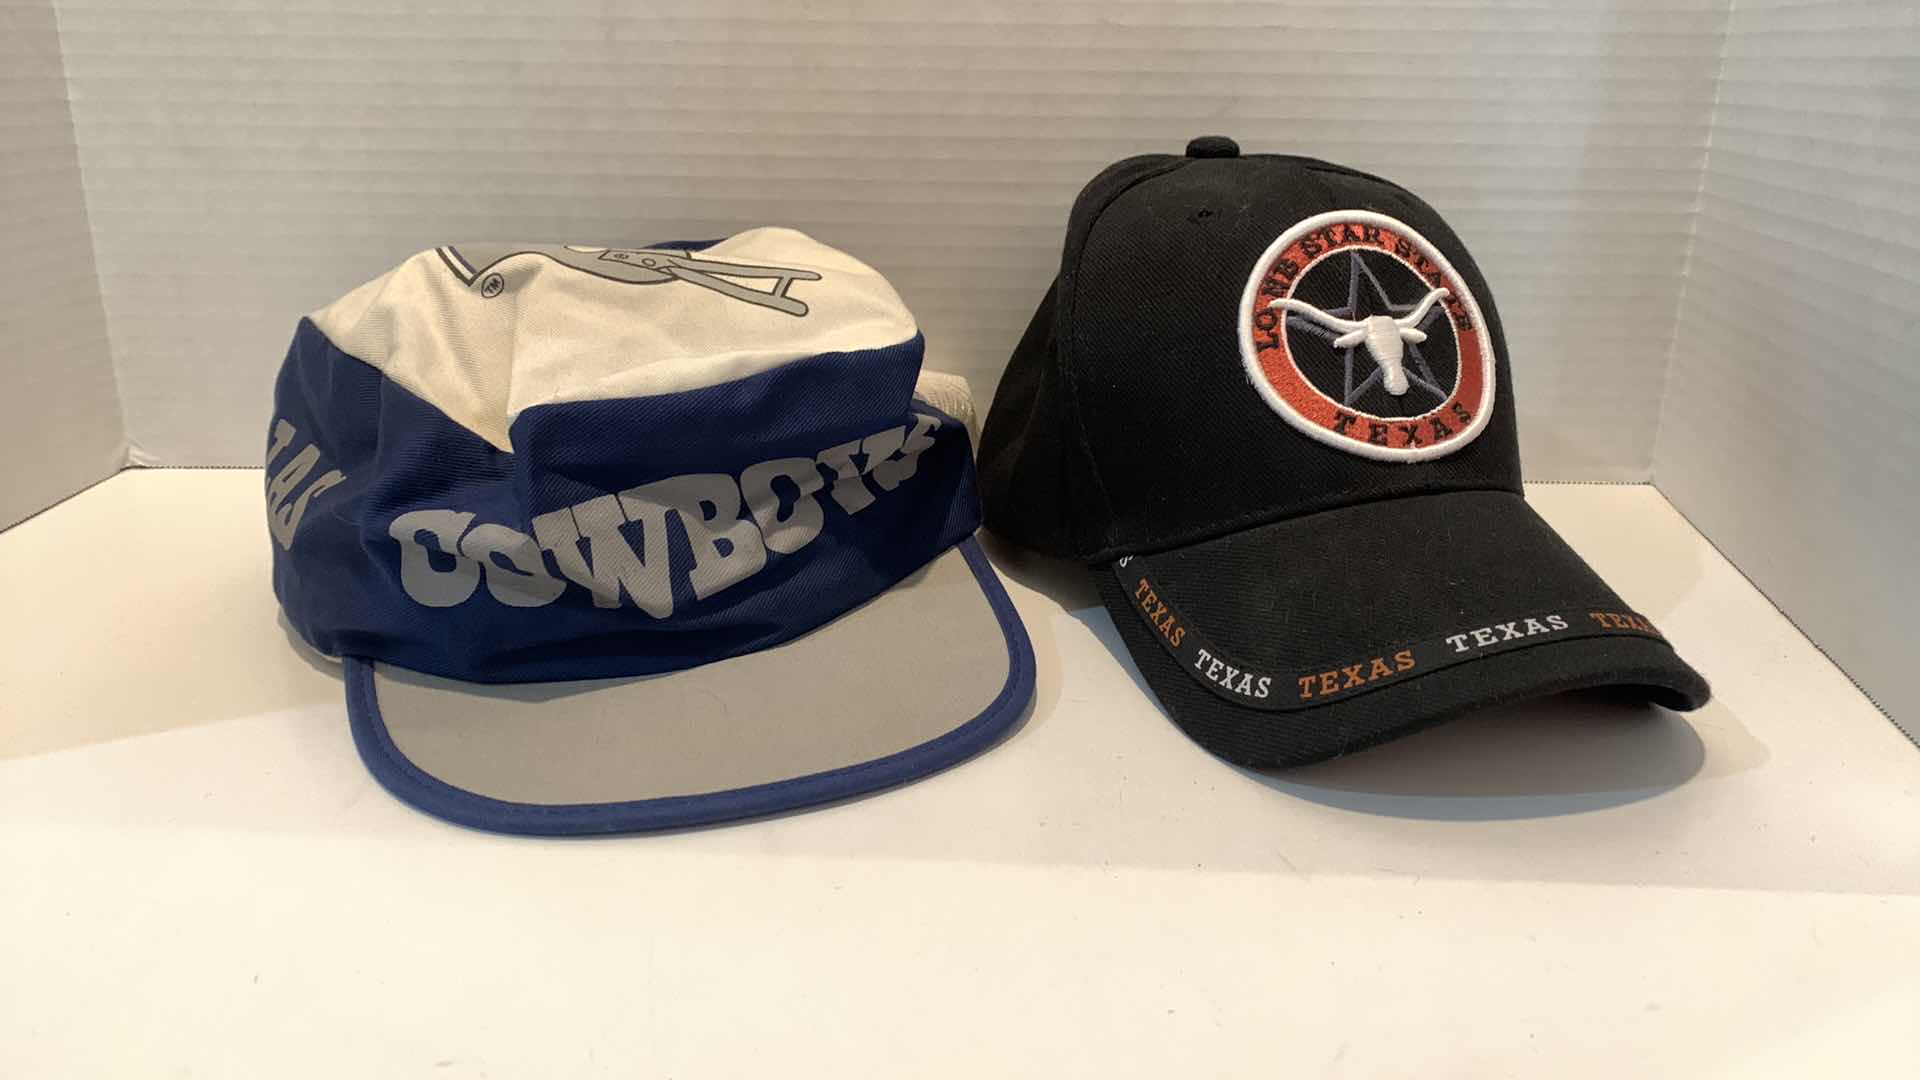 Photo 1 of 2 HATS TEXAS LONGHORNS AND DALLAS COWBOYS HATS